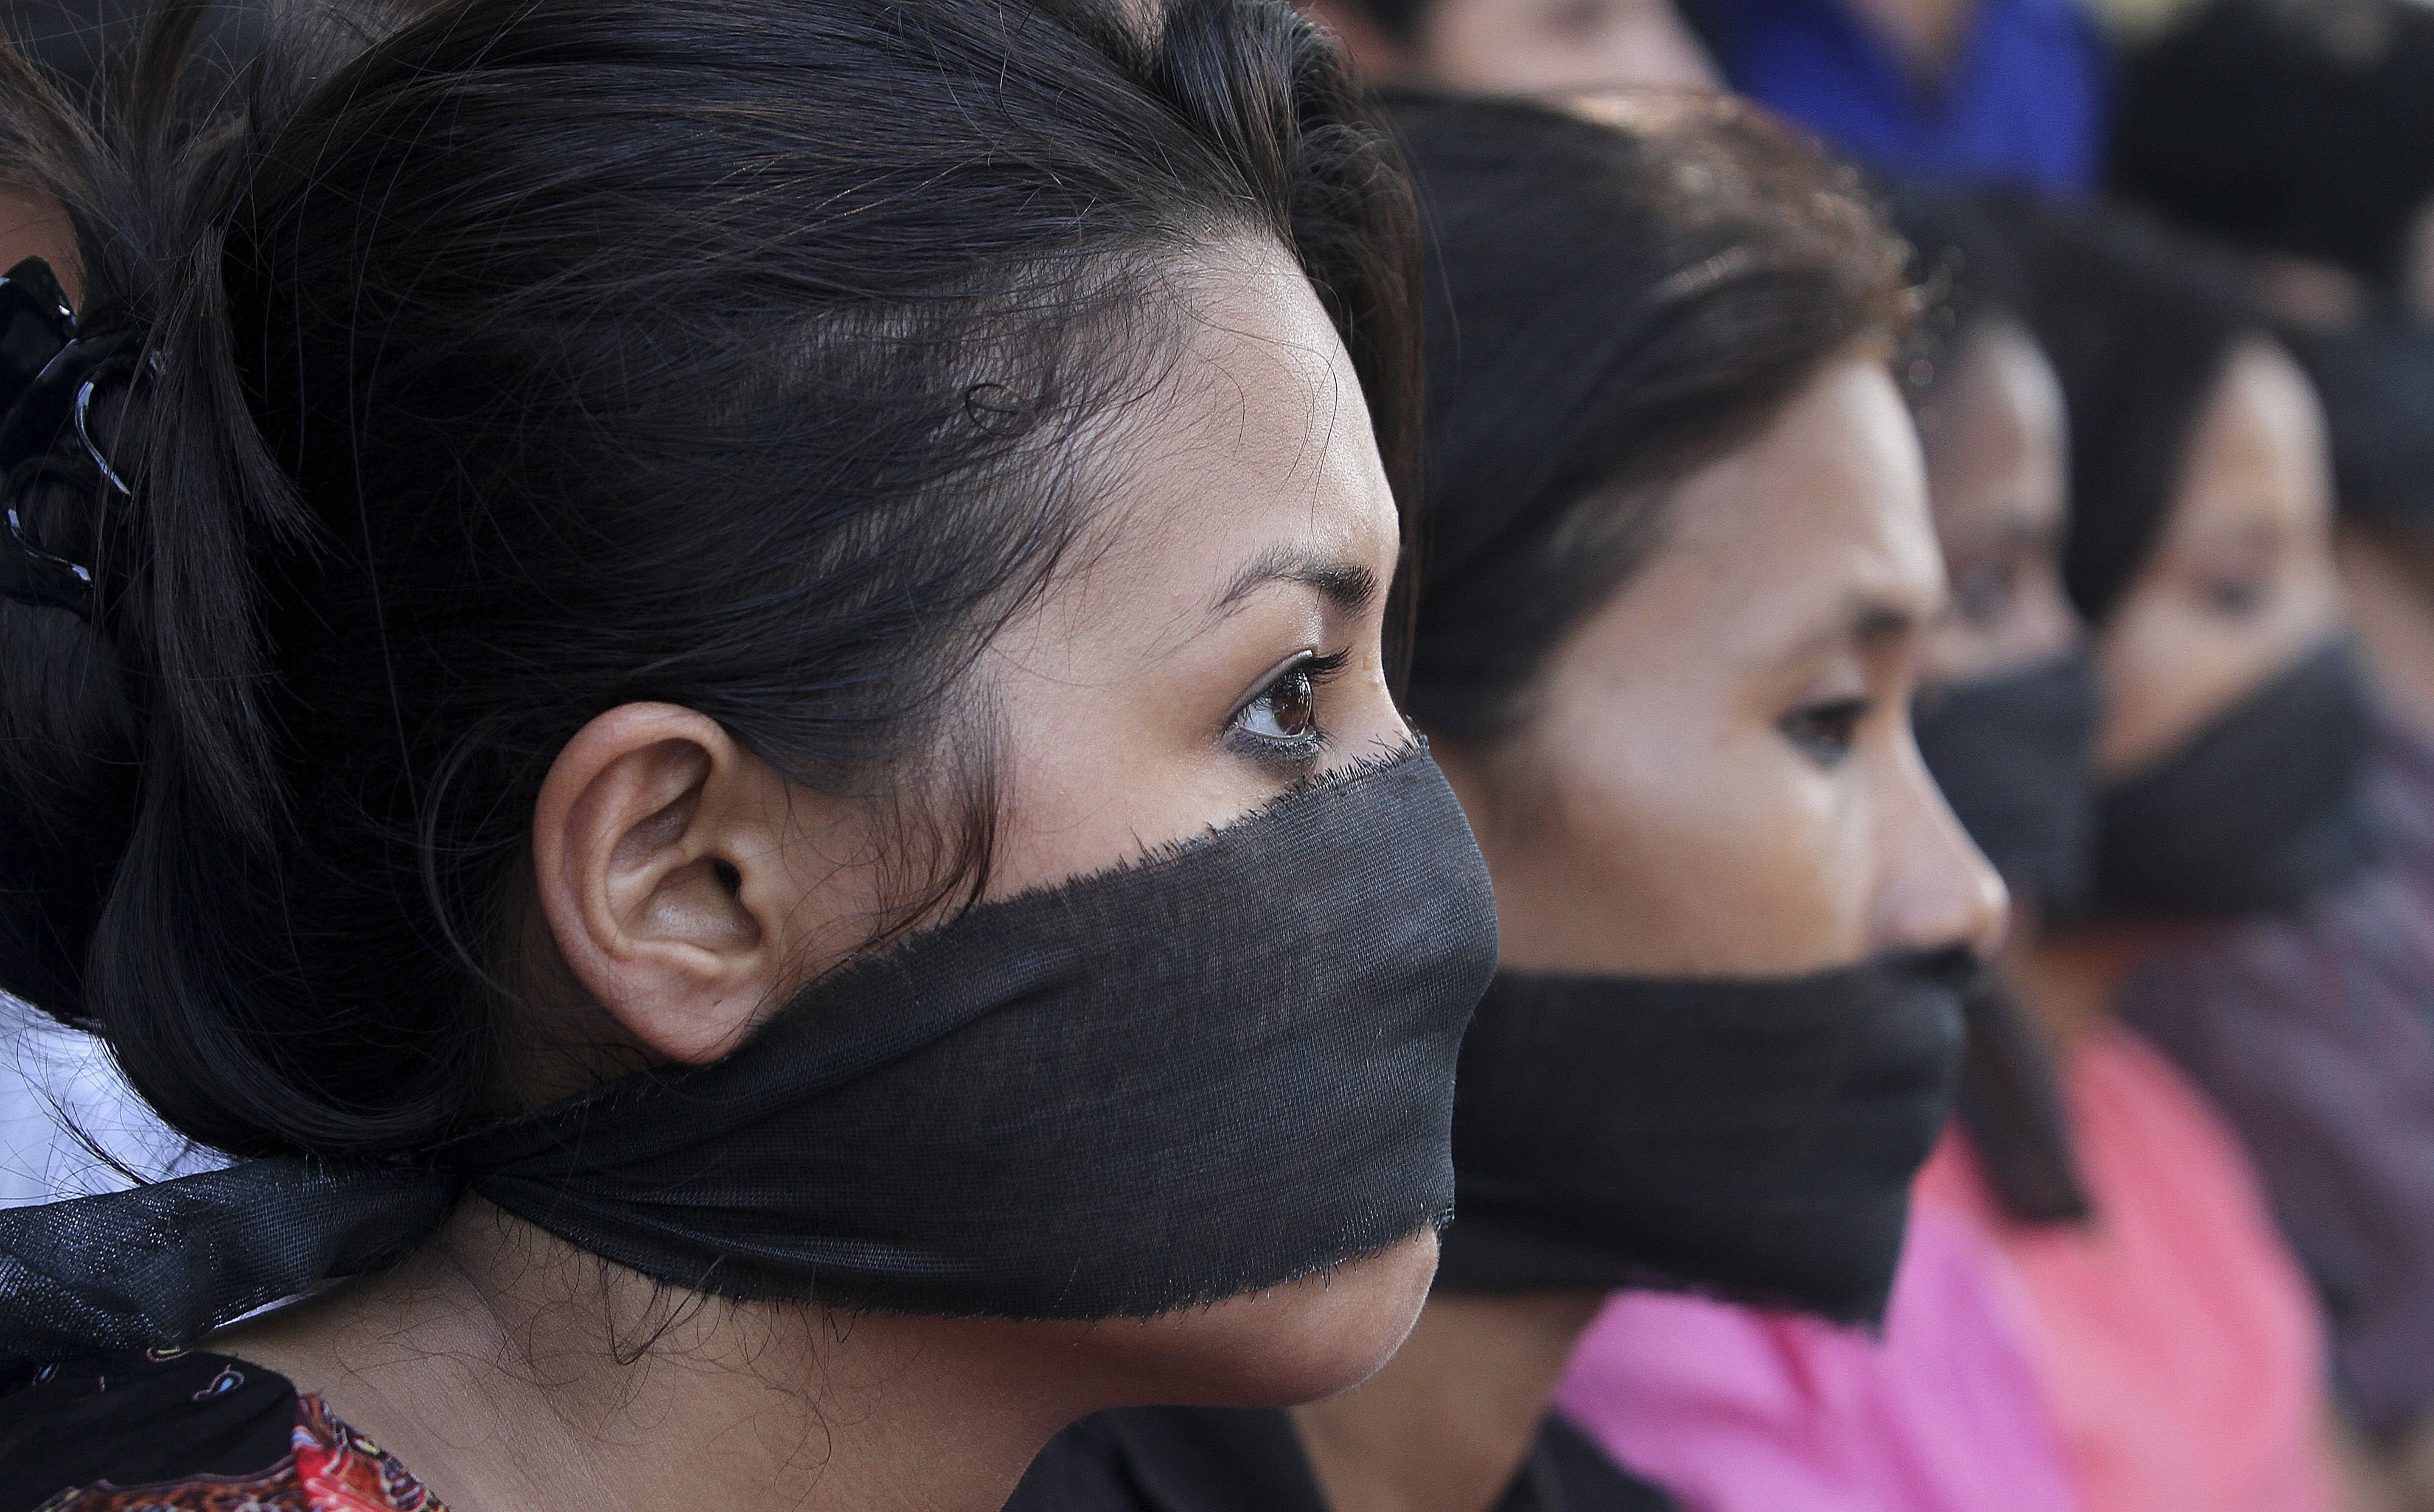 Jabardasti Nanga Sex Rape - Despite reforms, sexual assault survivors face systemic barriers in India |  CNN